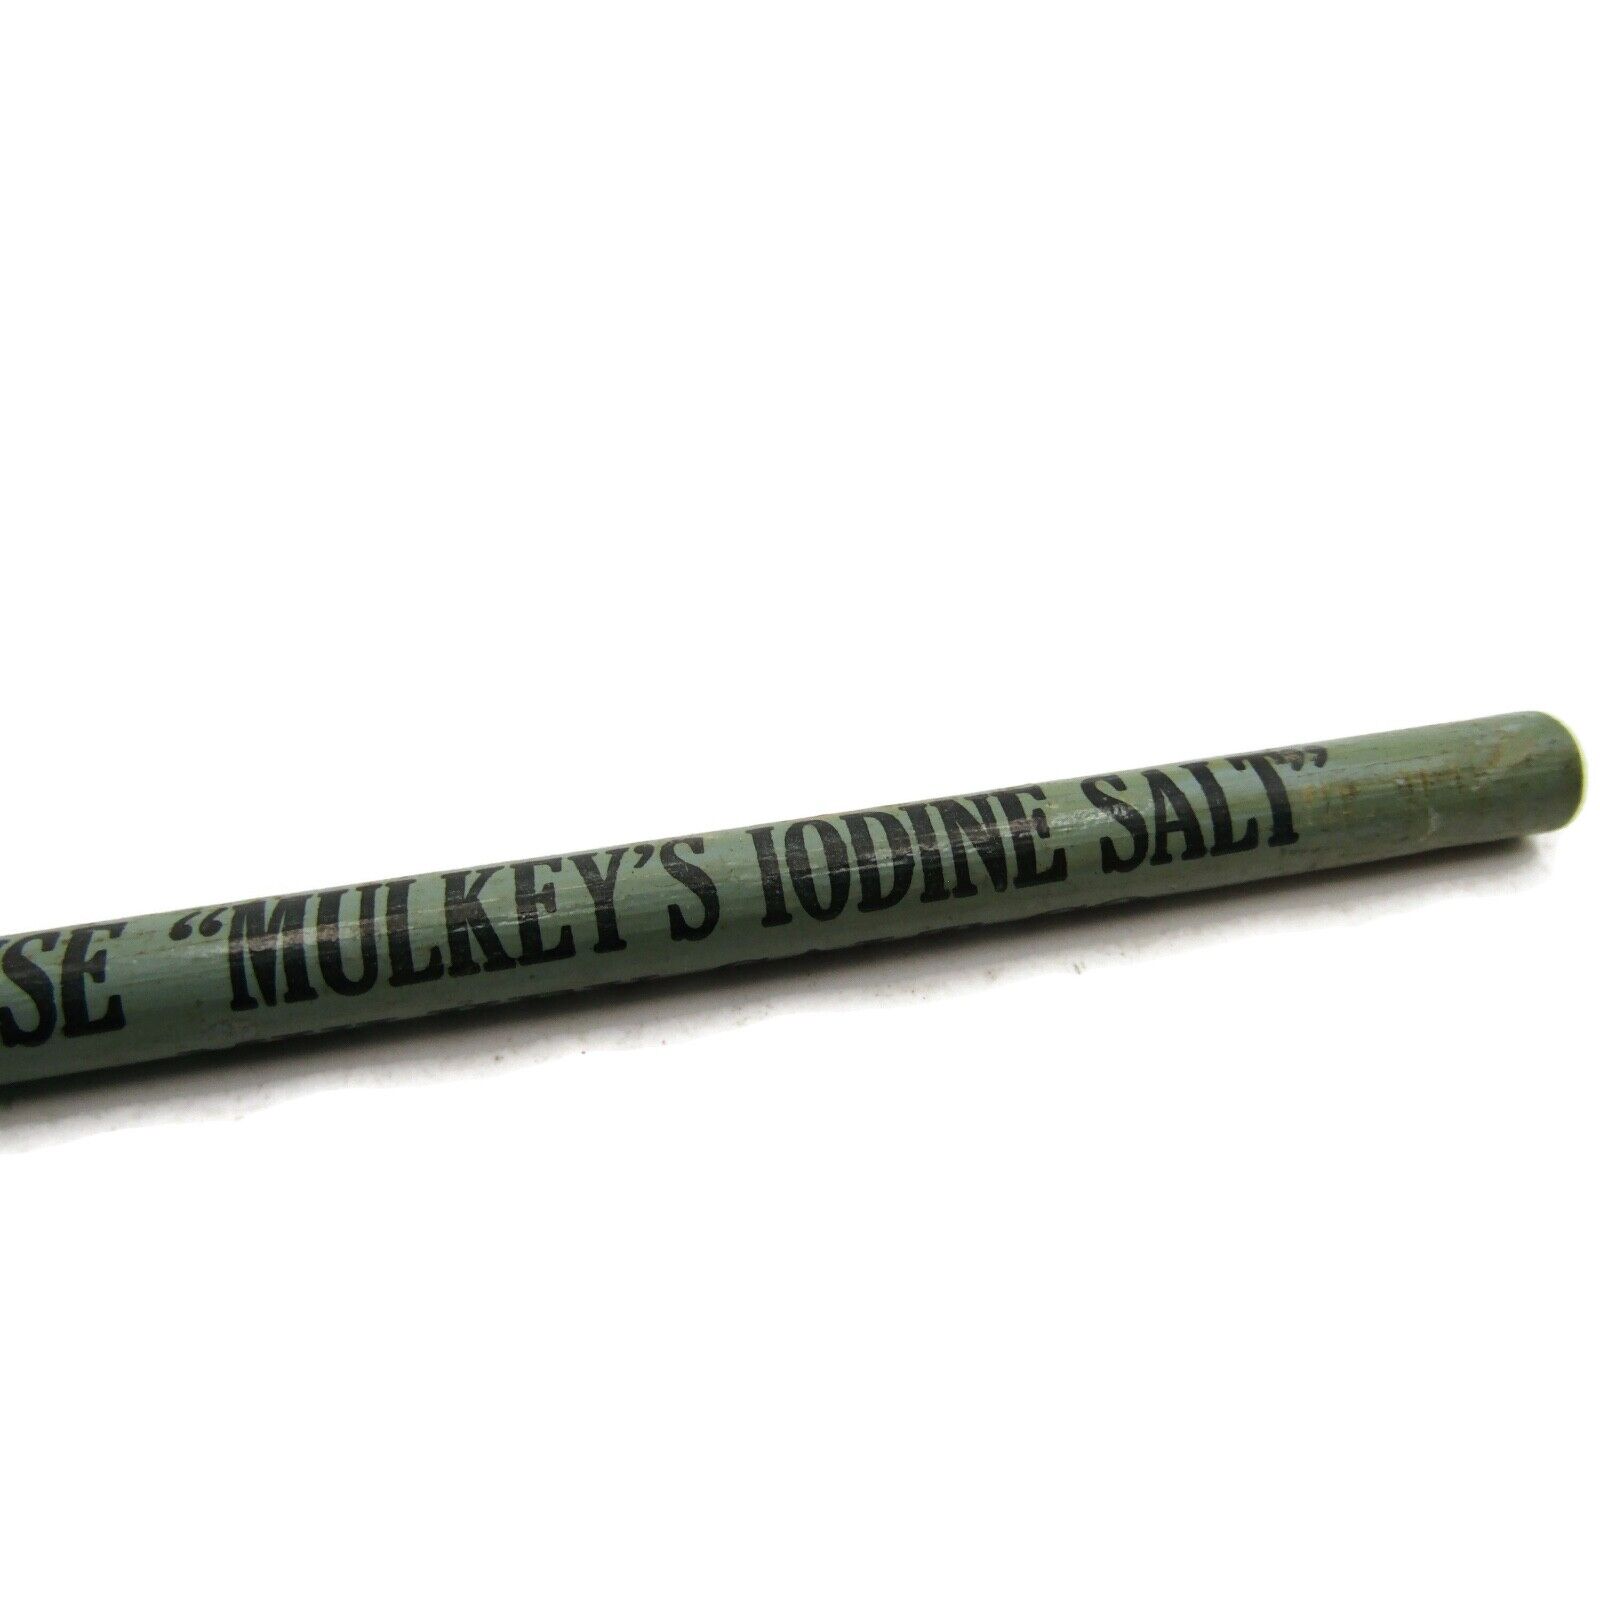 Detroit Michigan Mulkey Salt Co. Mulkey\'s Iodine Salt Advertising Pencil Vintage